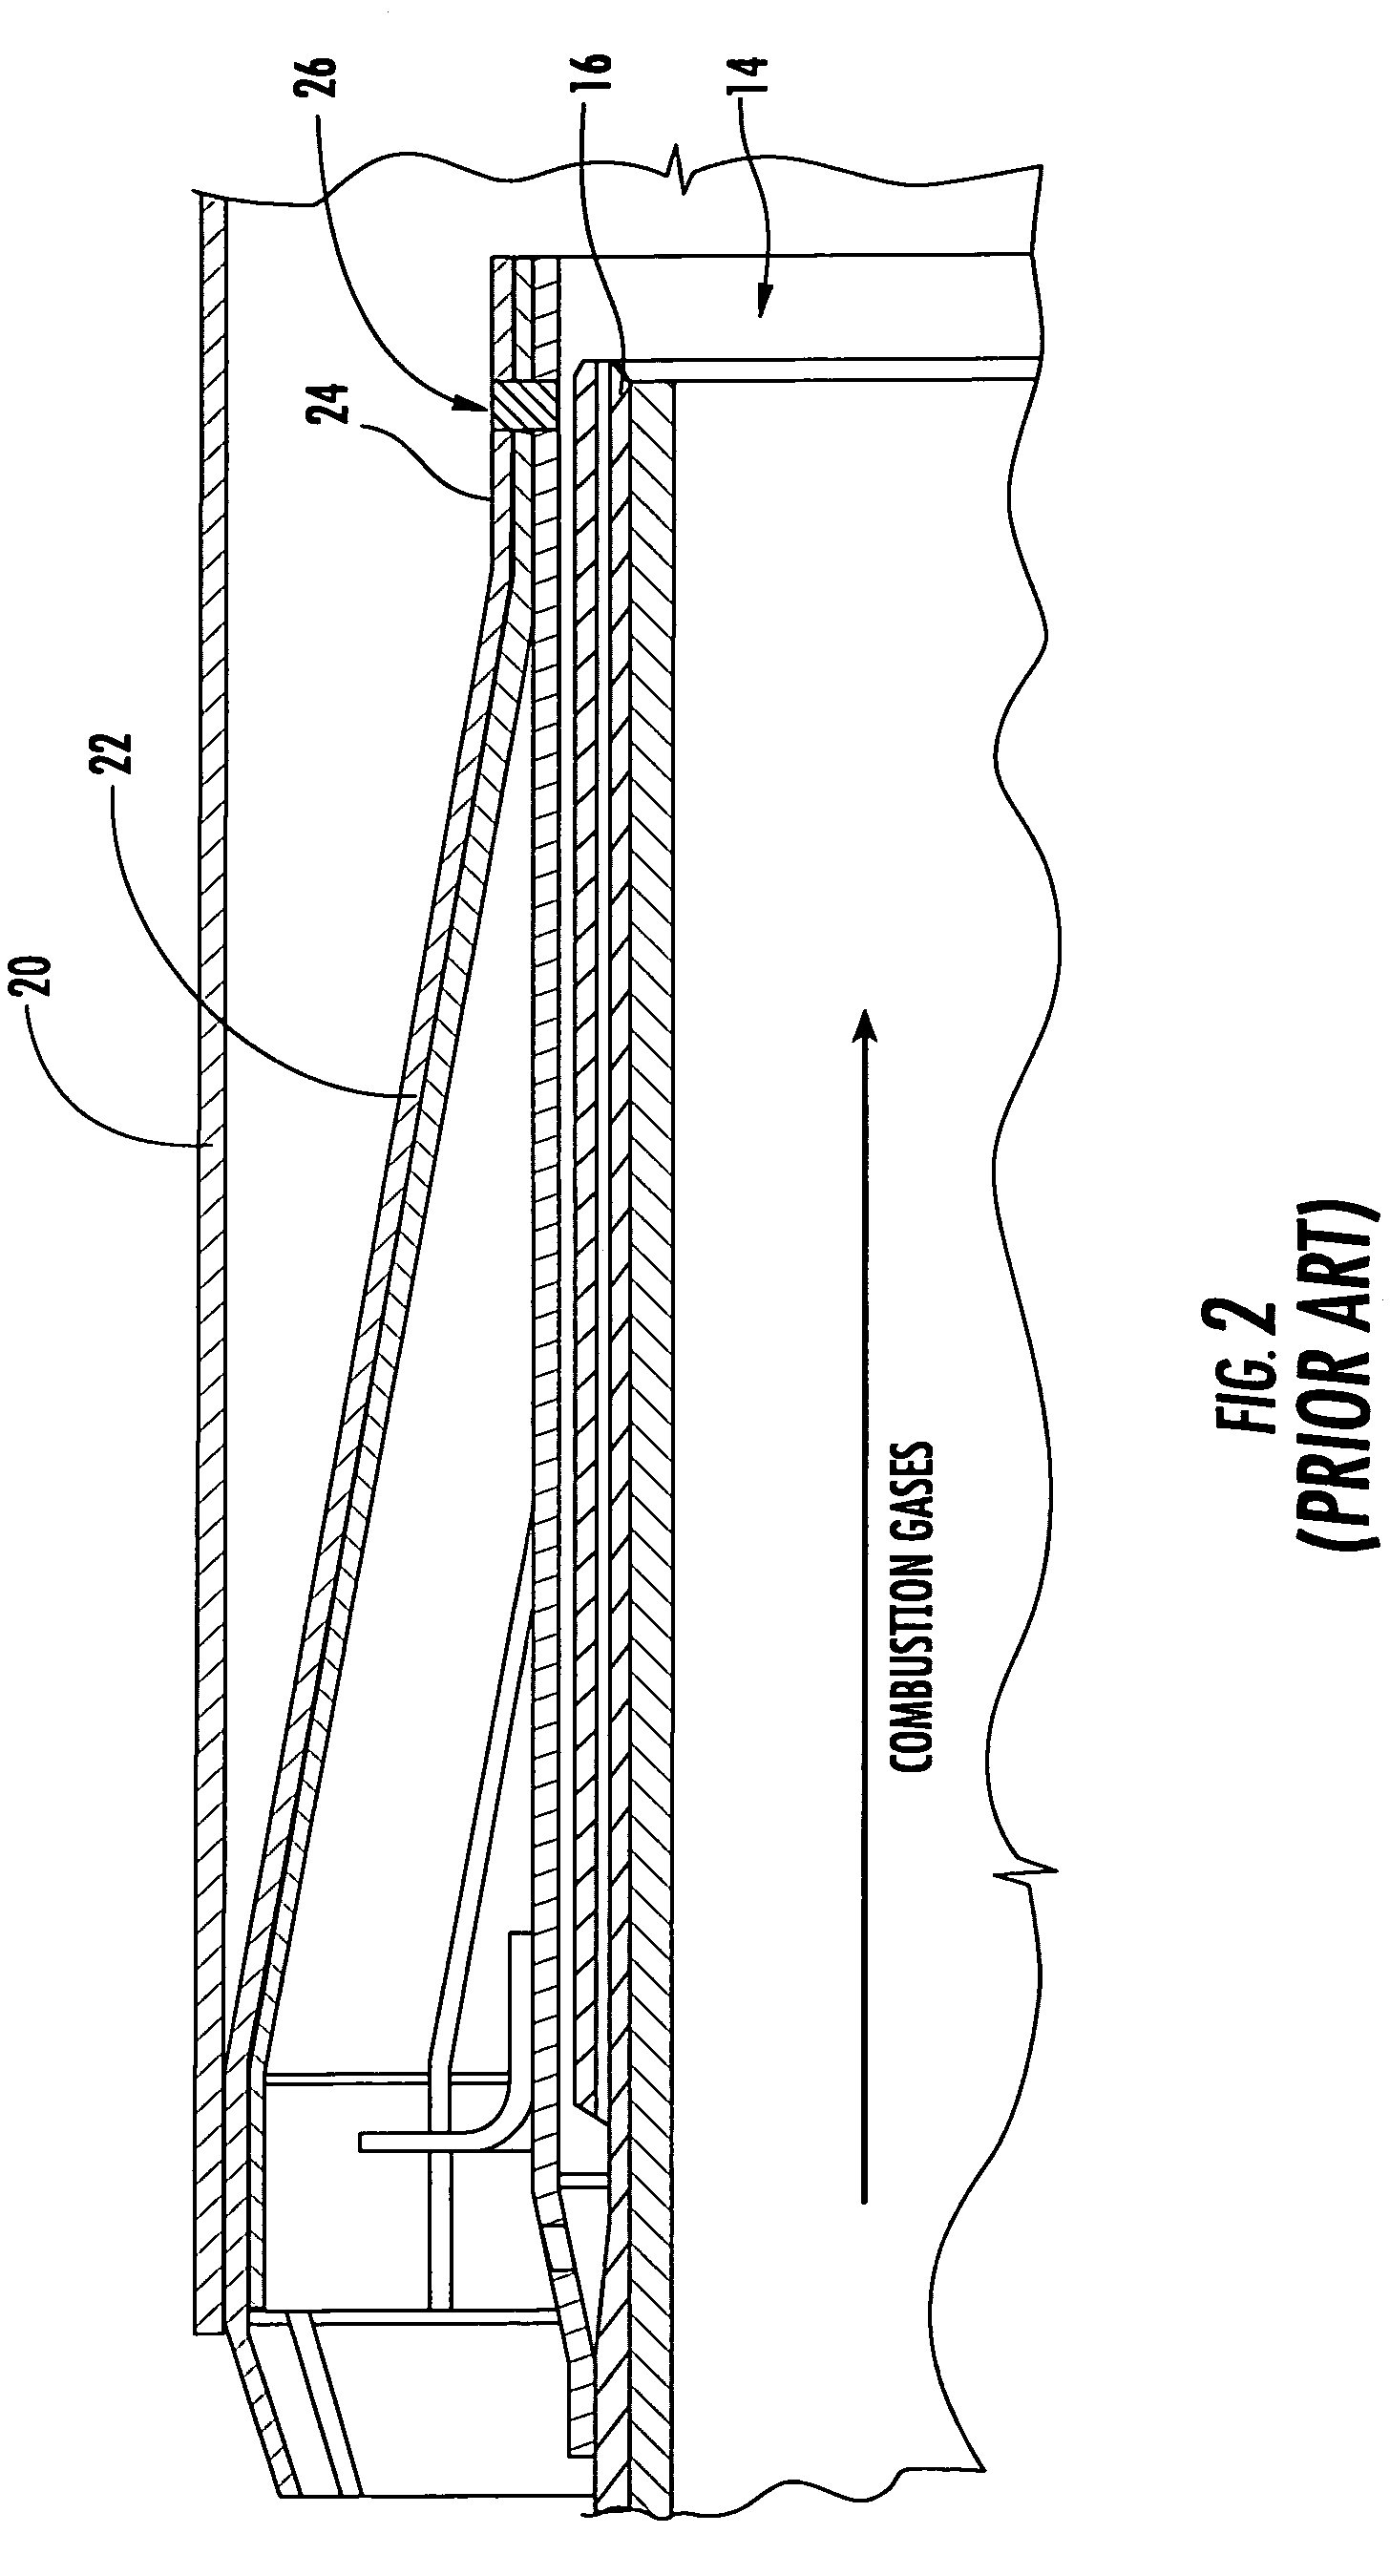 Combustor spring clip seal system